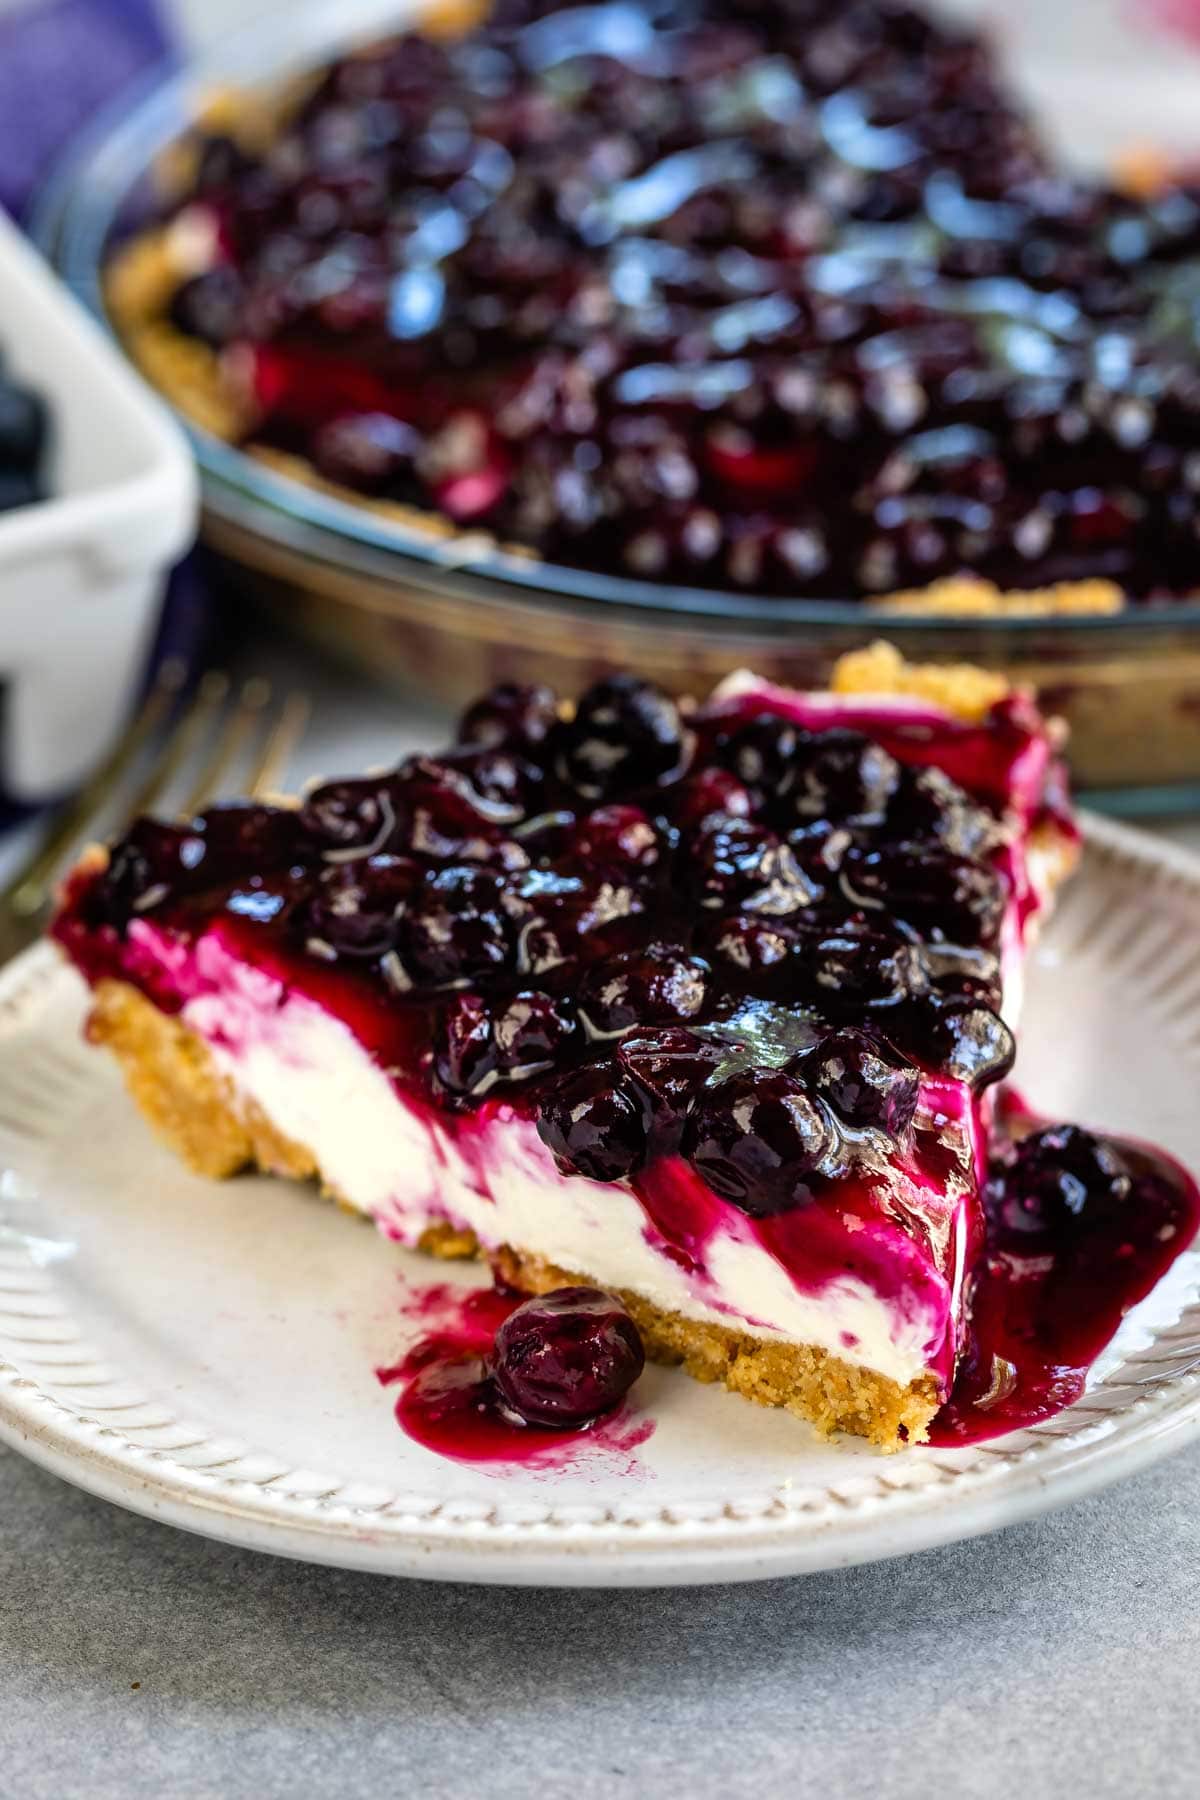 https://www.crazyforcrust.com/wp-content/uploads/2022/05/blueberry-cheesecake-5.jpg